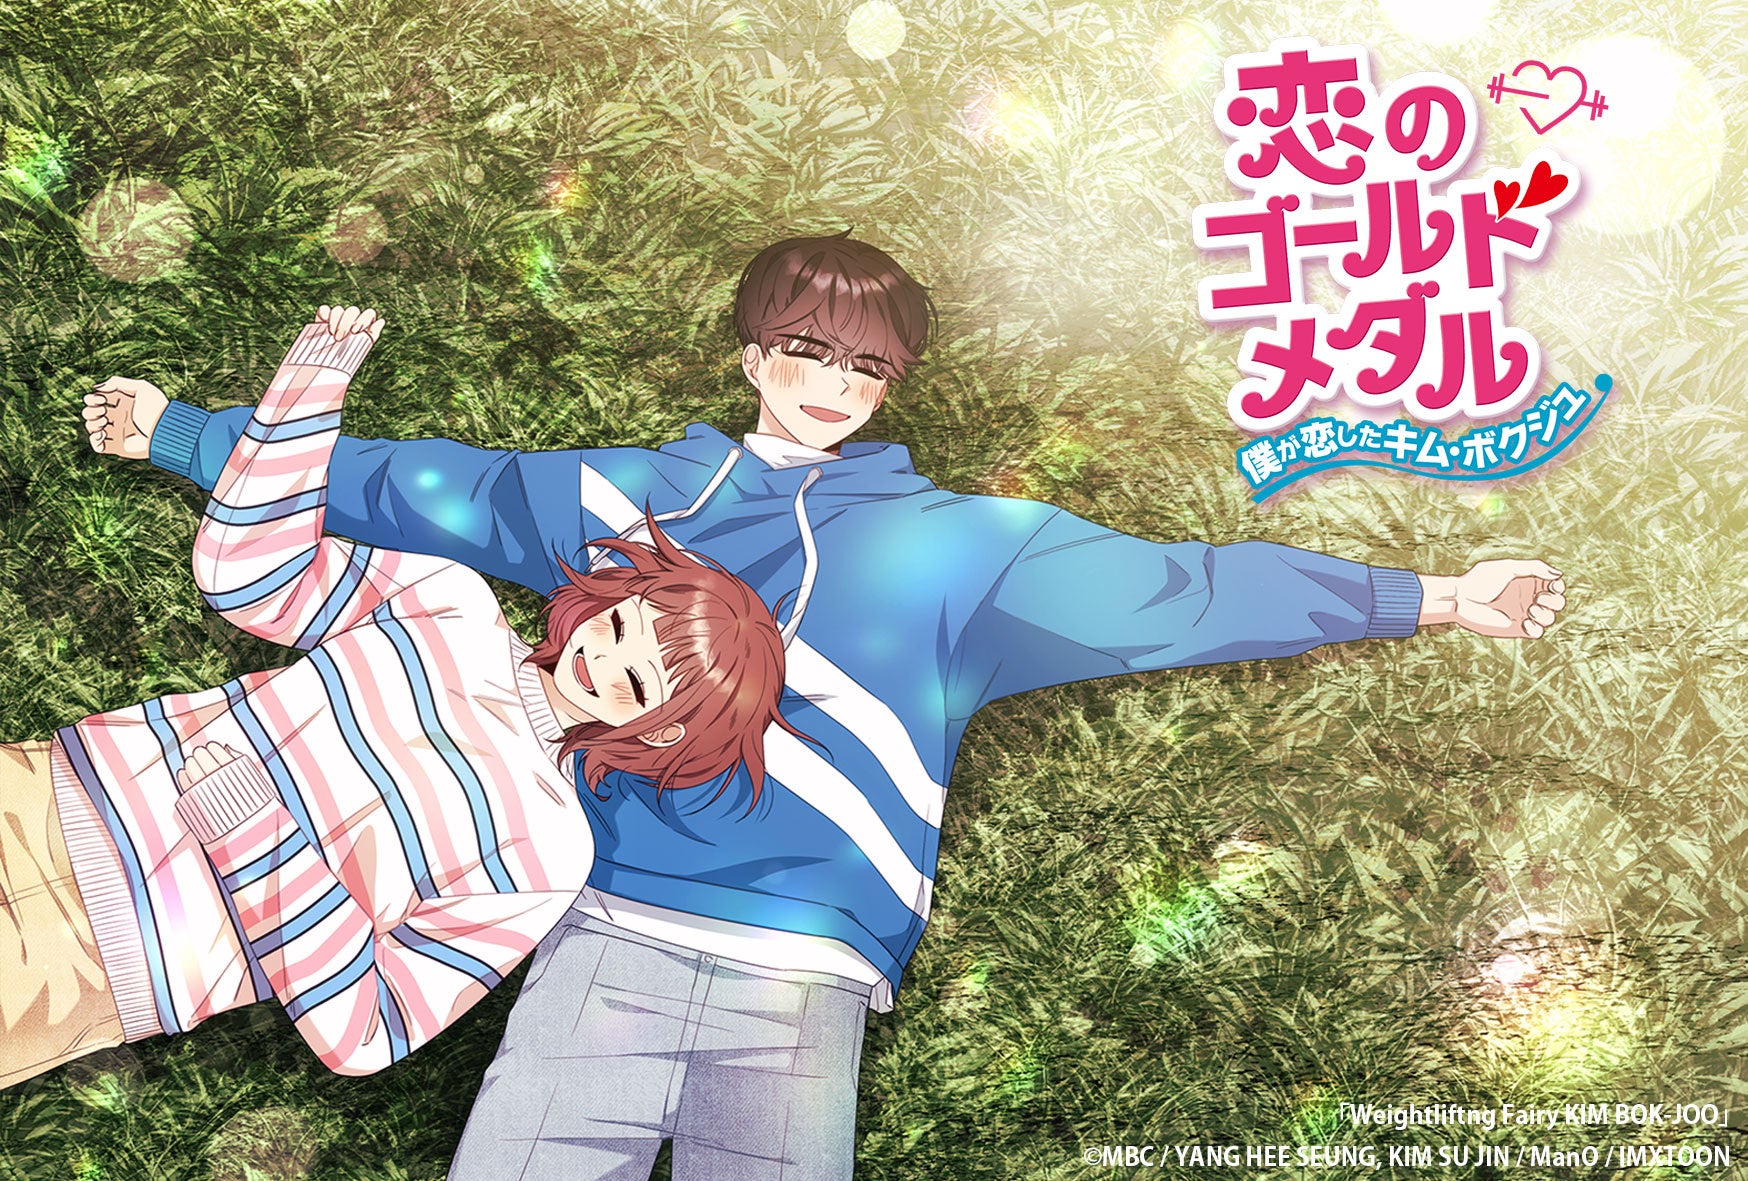 TVアニメ『カノジョも彼女』より、描き下ろし「抱き枕カバー」の再販決定！「FaNeMa」にて受注開始！